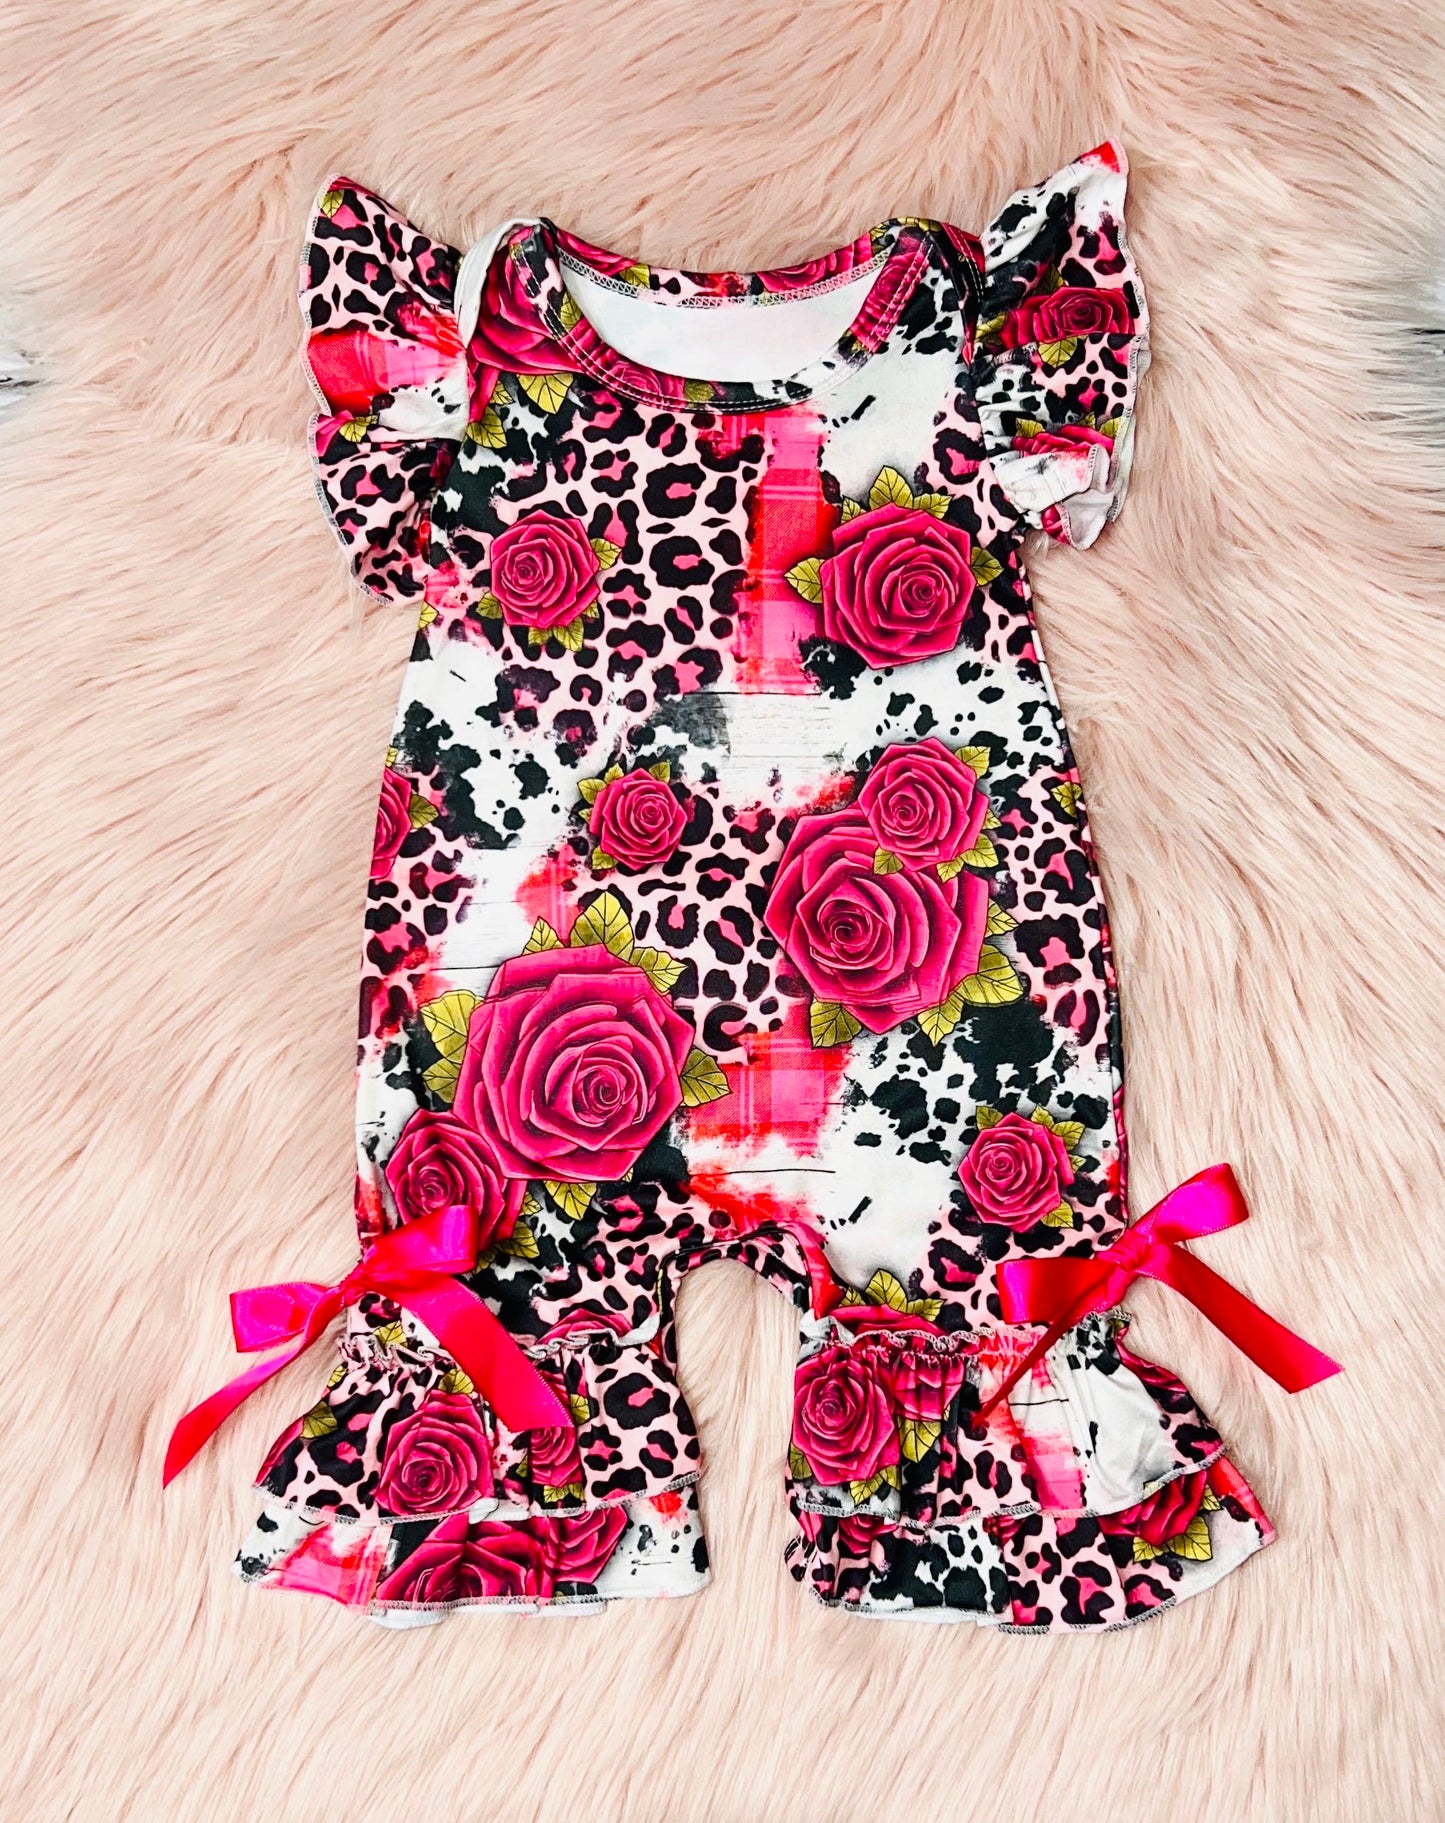 Hot pink roses & cheetah baby ruffle romper DLH1124-10